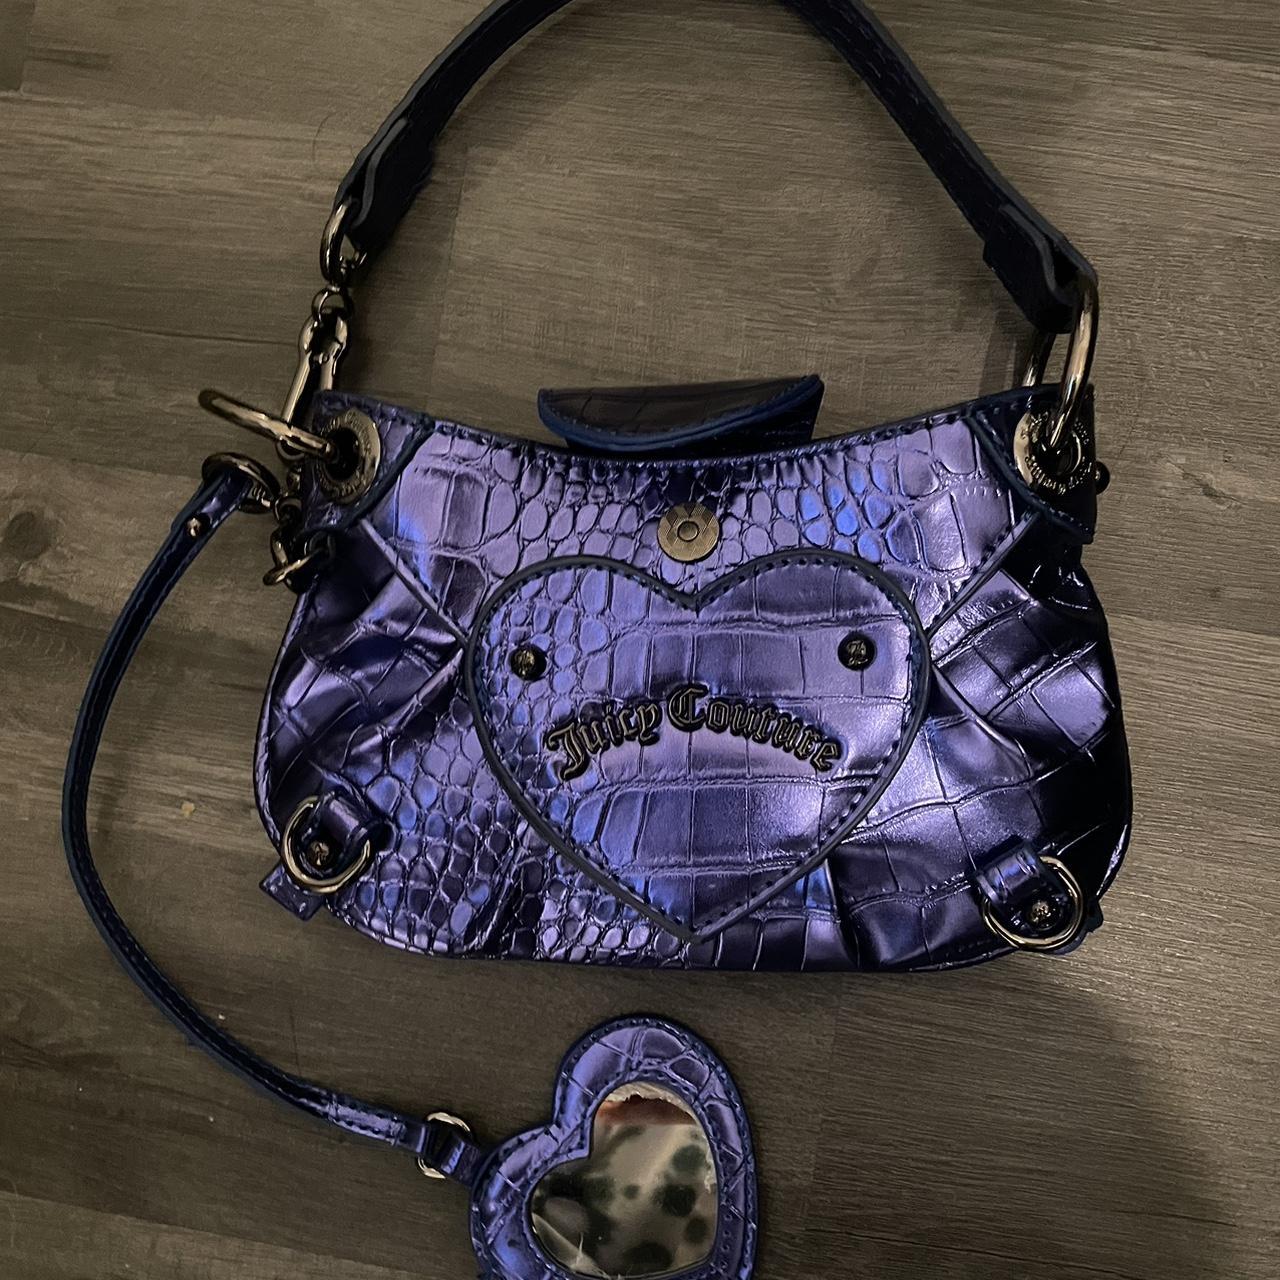 Blue Metallic Croc Juicy Couture Handbag This item... - Depop